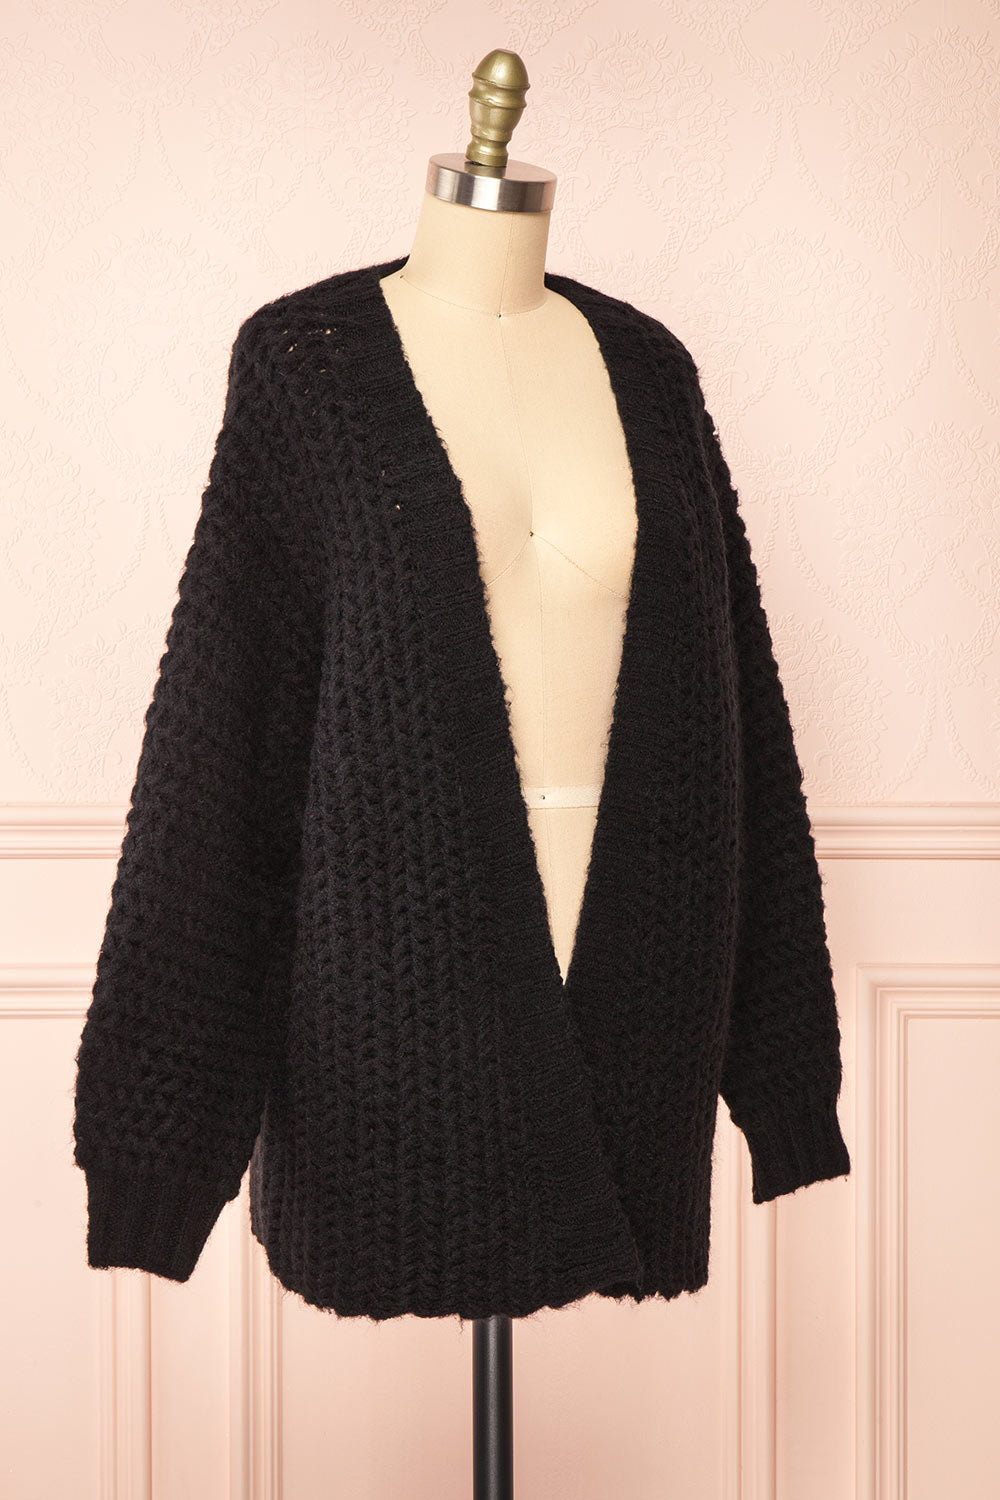 Francoise Black Knit Open-Front Cardigan | Boutique 1861 side view